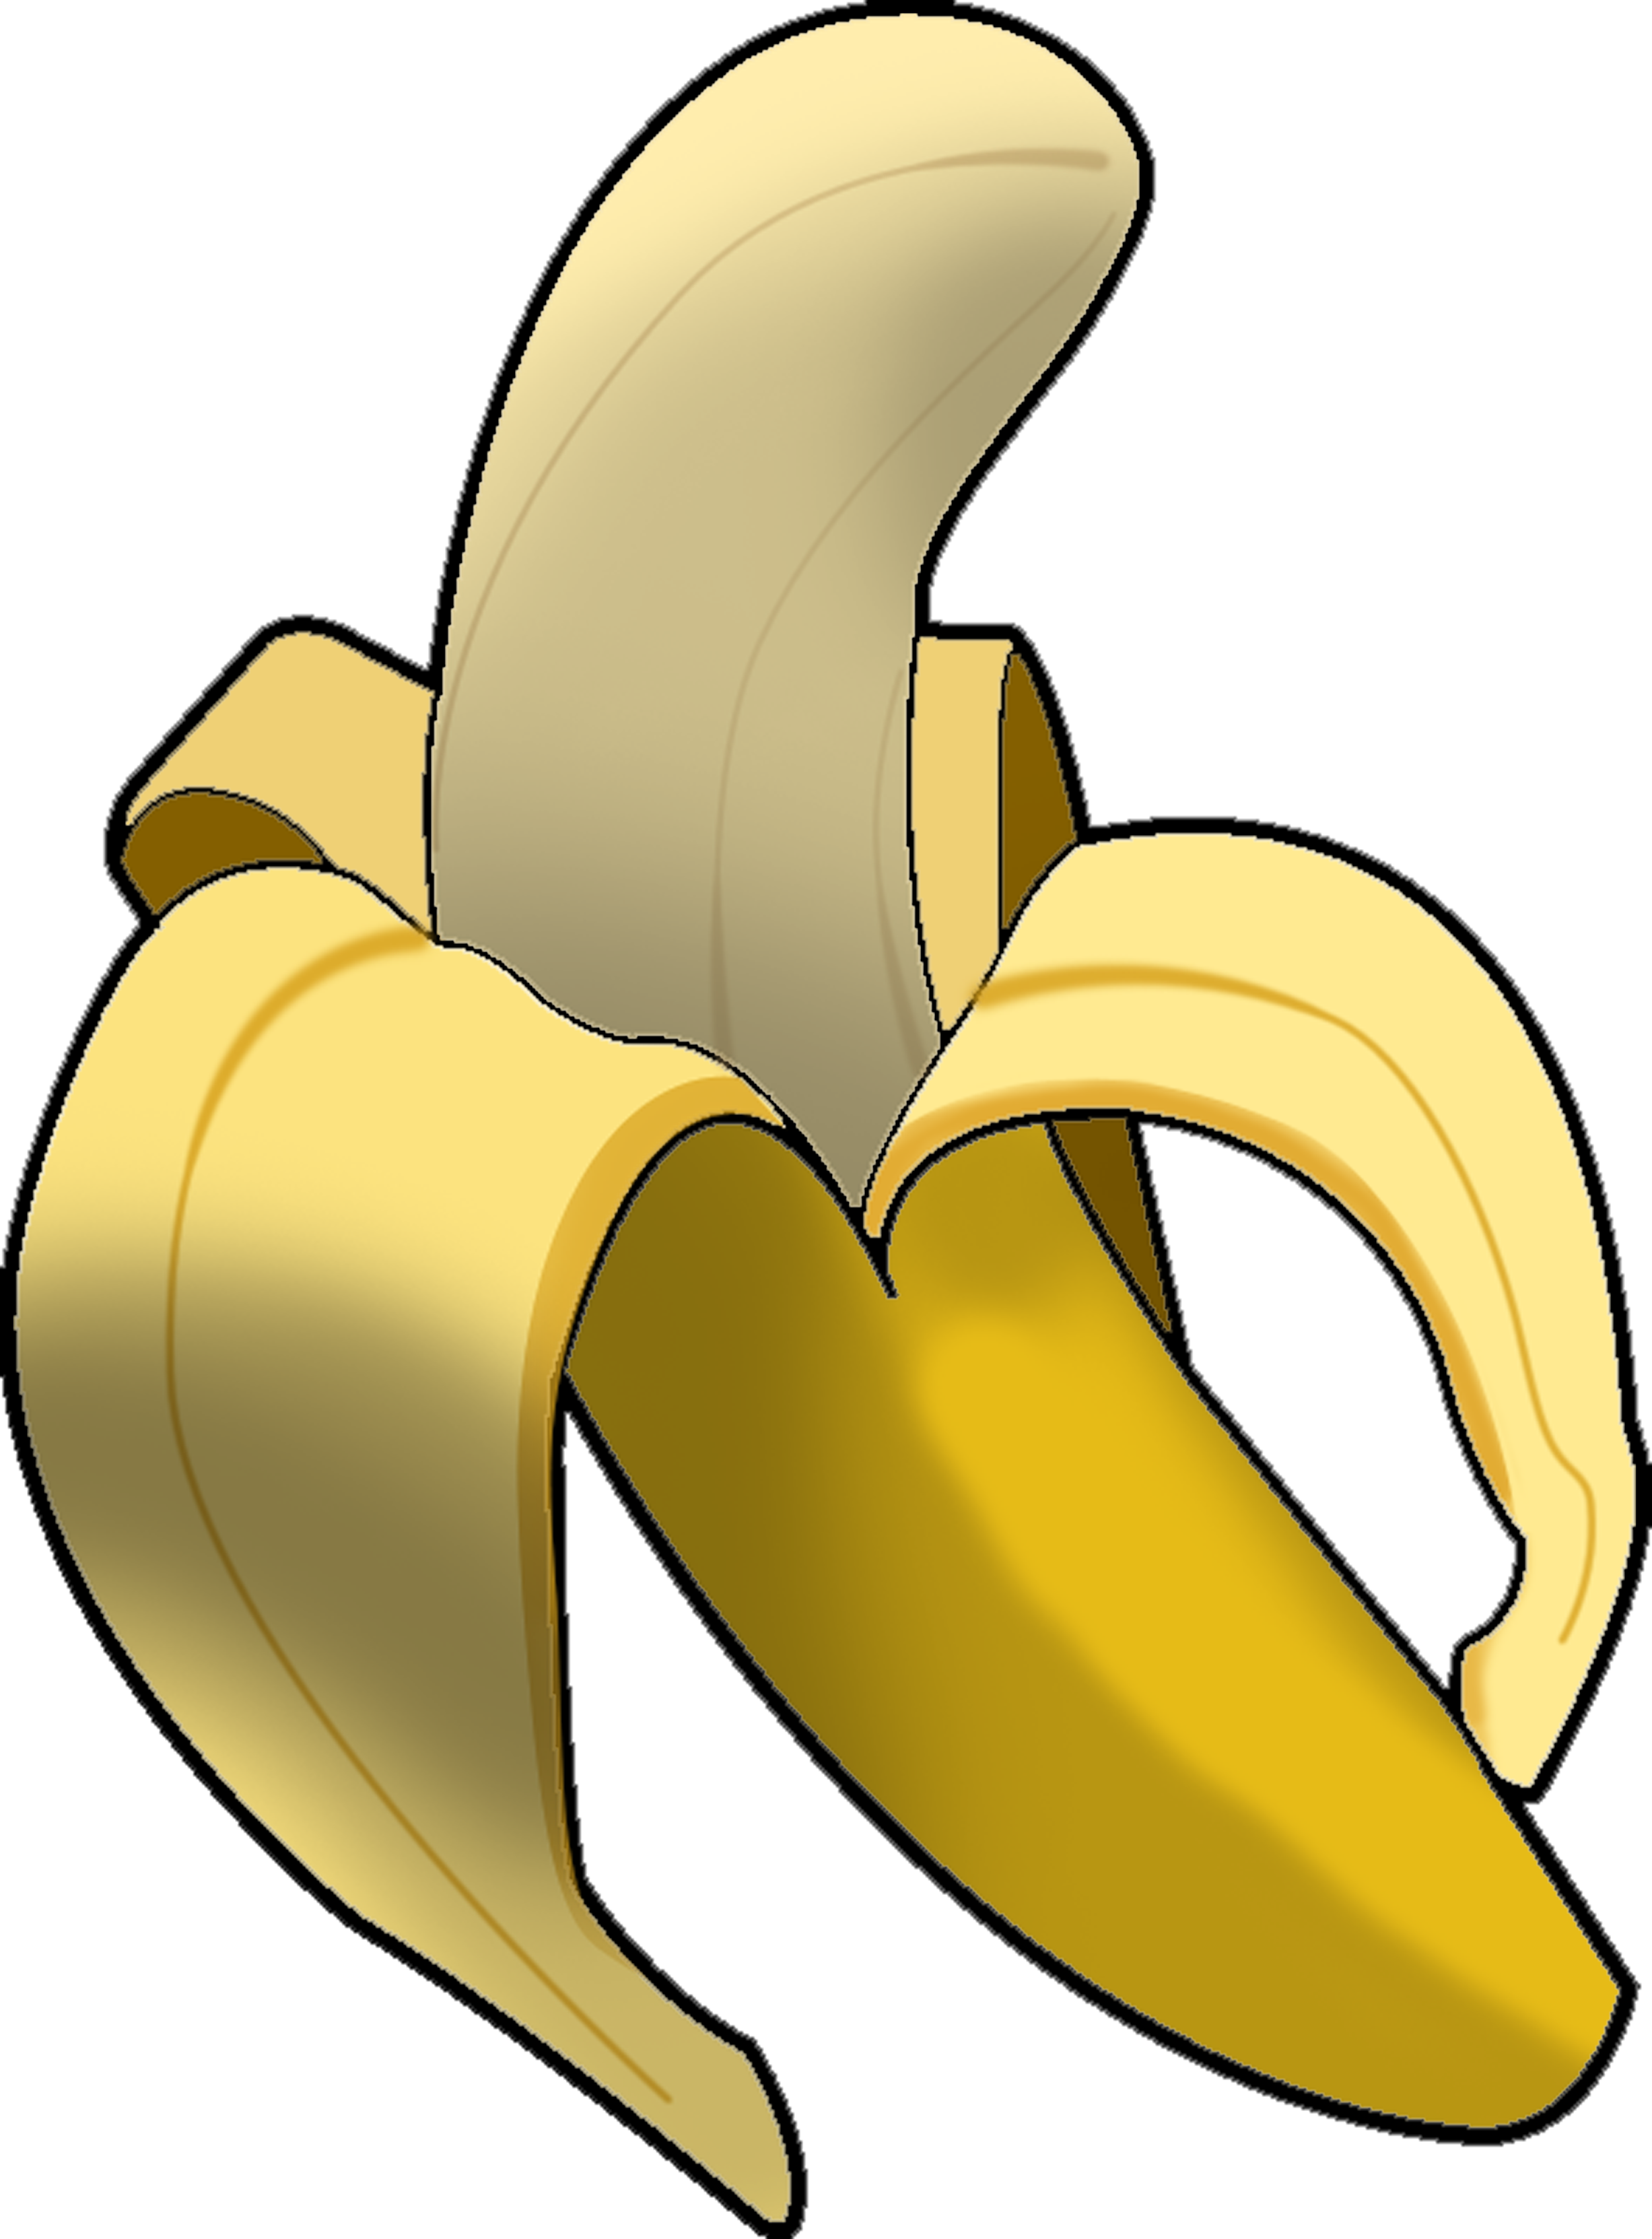 Plantain Banana Free Images at Clker com vector clip 